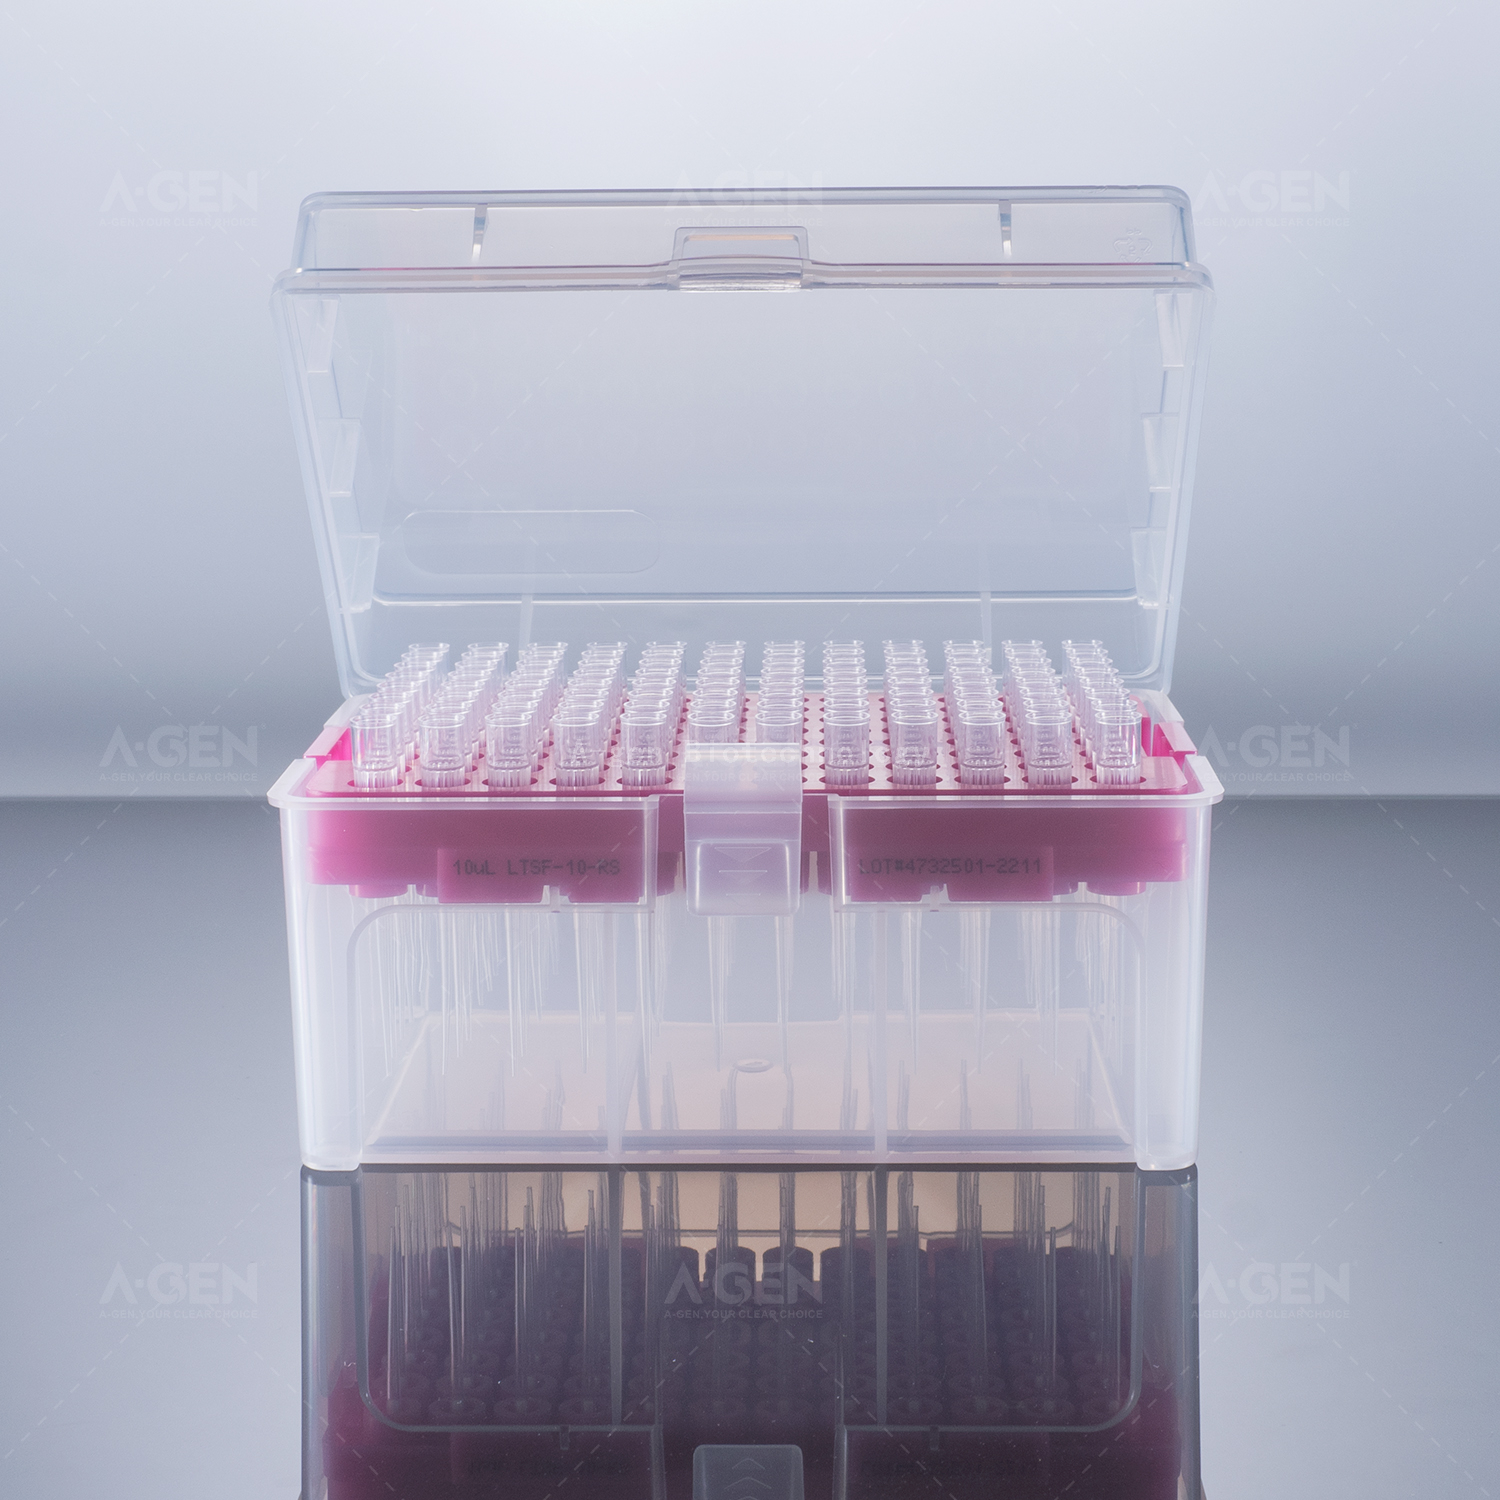 Sterilization Rainin 10uL Filter Tip Packed in Rack 